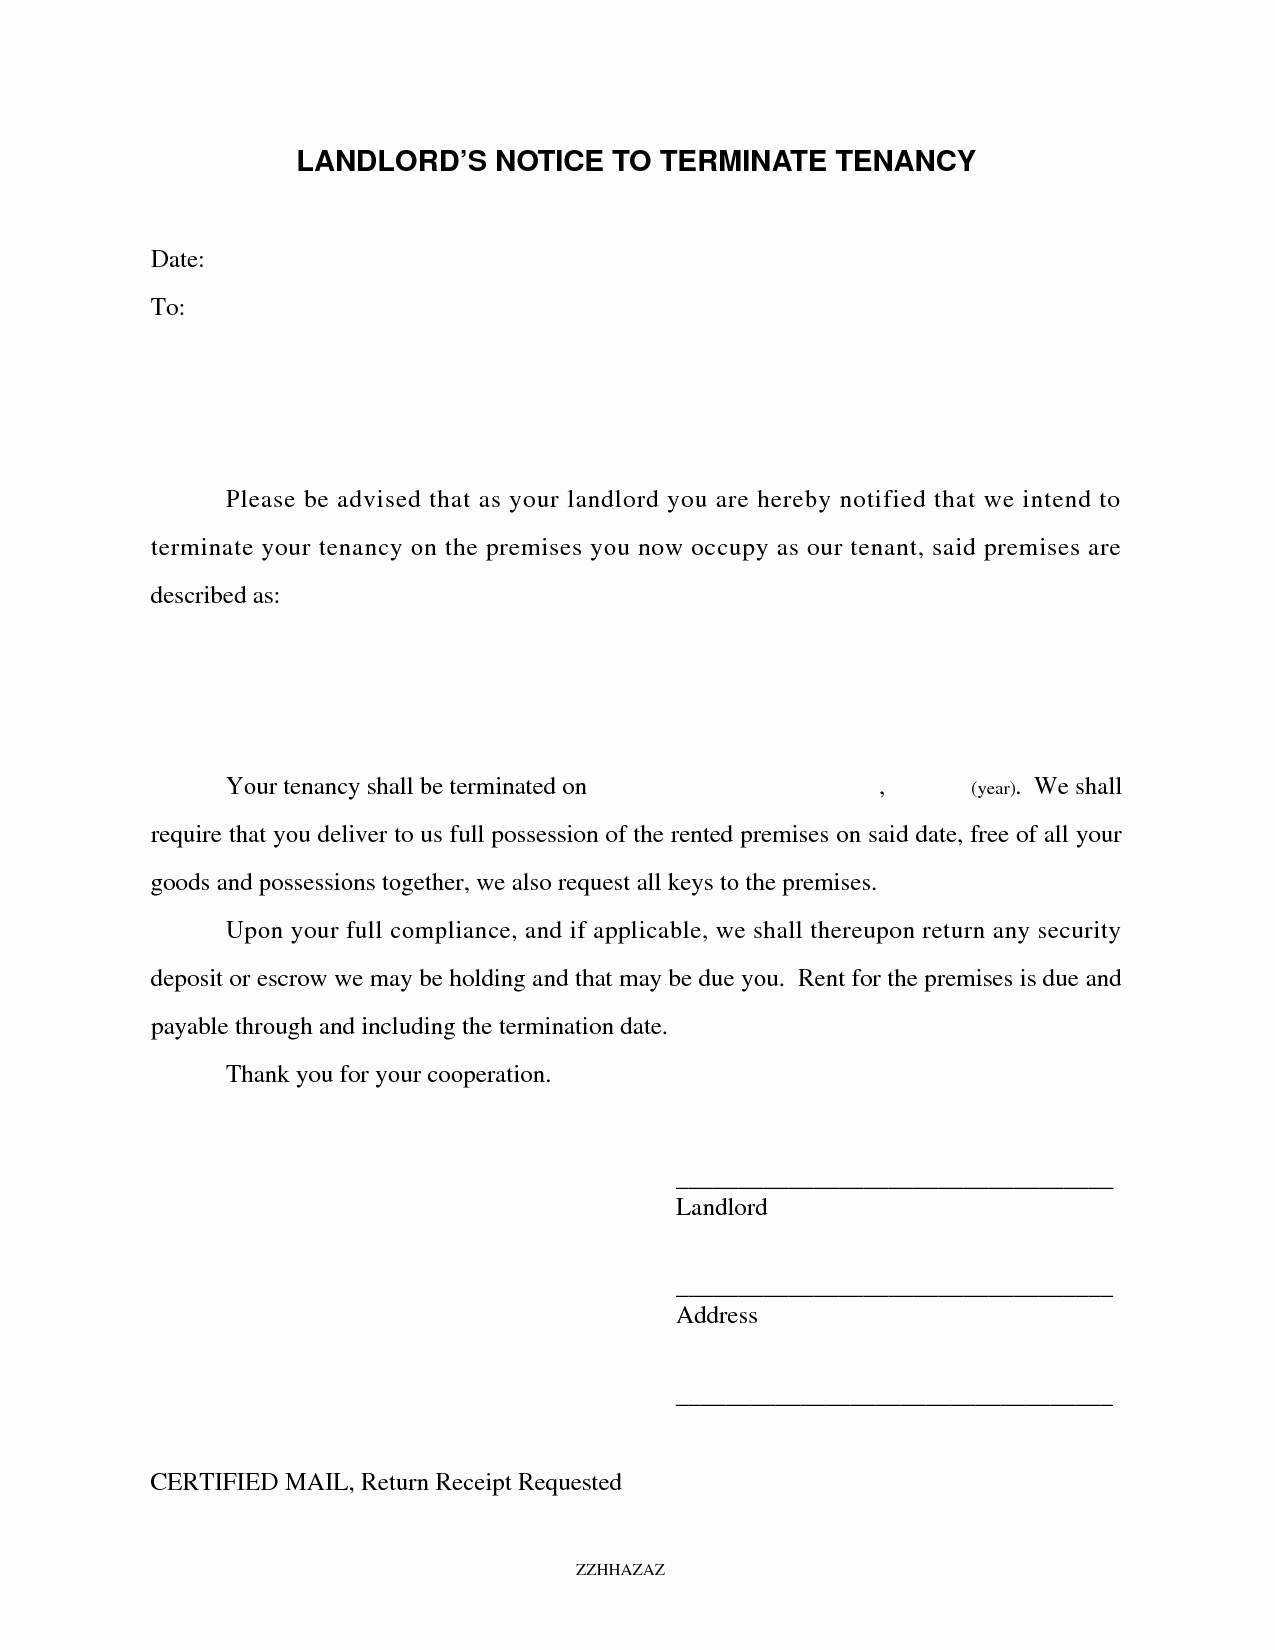 Sample Letter to Landlord Lovely Tenant Lease Termination Letter From Landlord